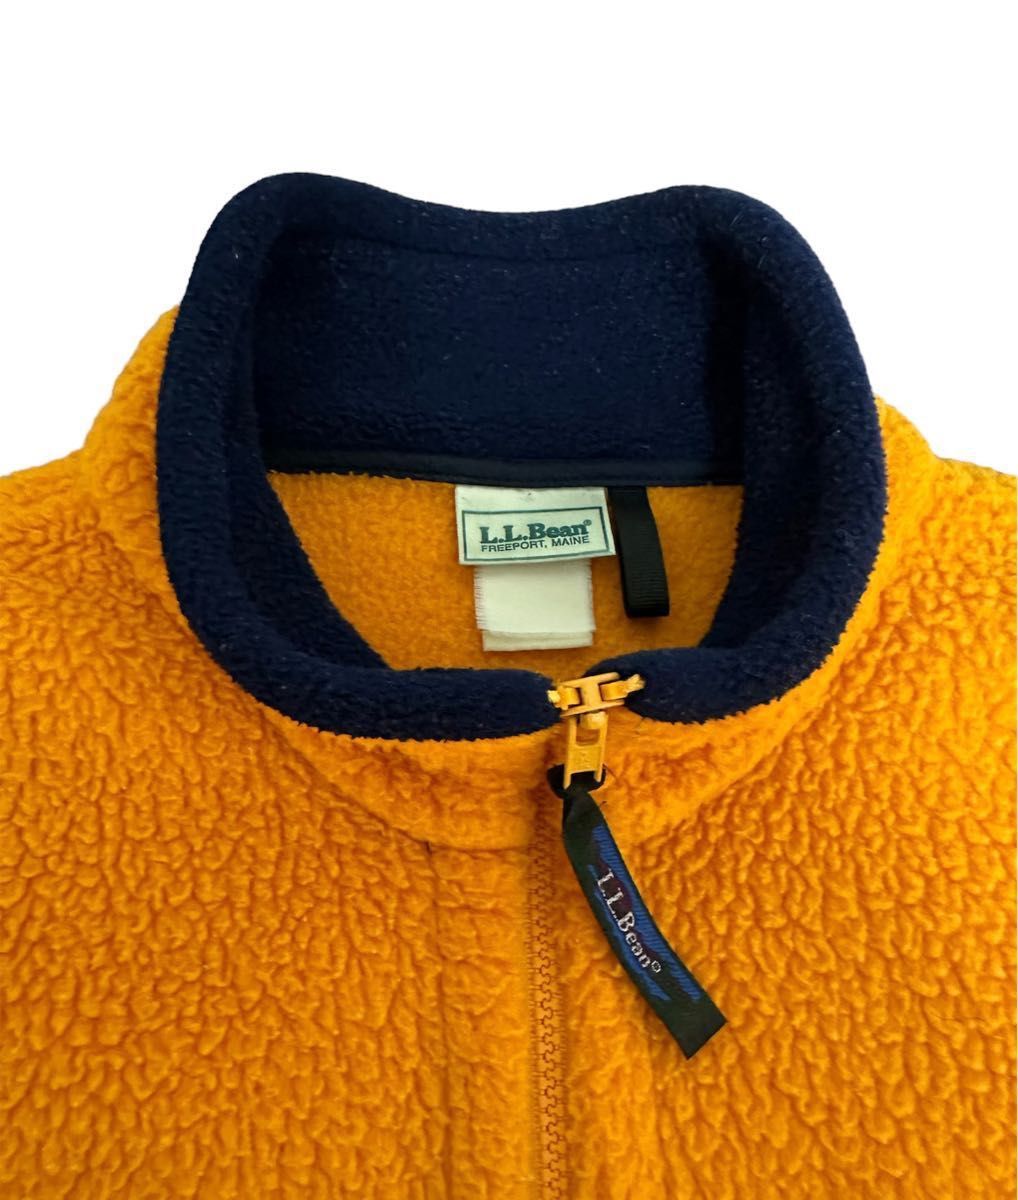 90s L.L.Bean fleece jacket エルエルビーン フリースジャケット オレンジ × ネイビー